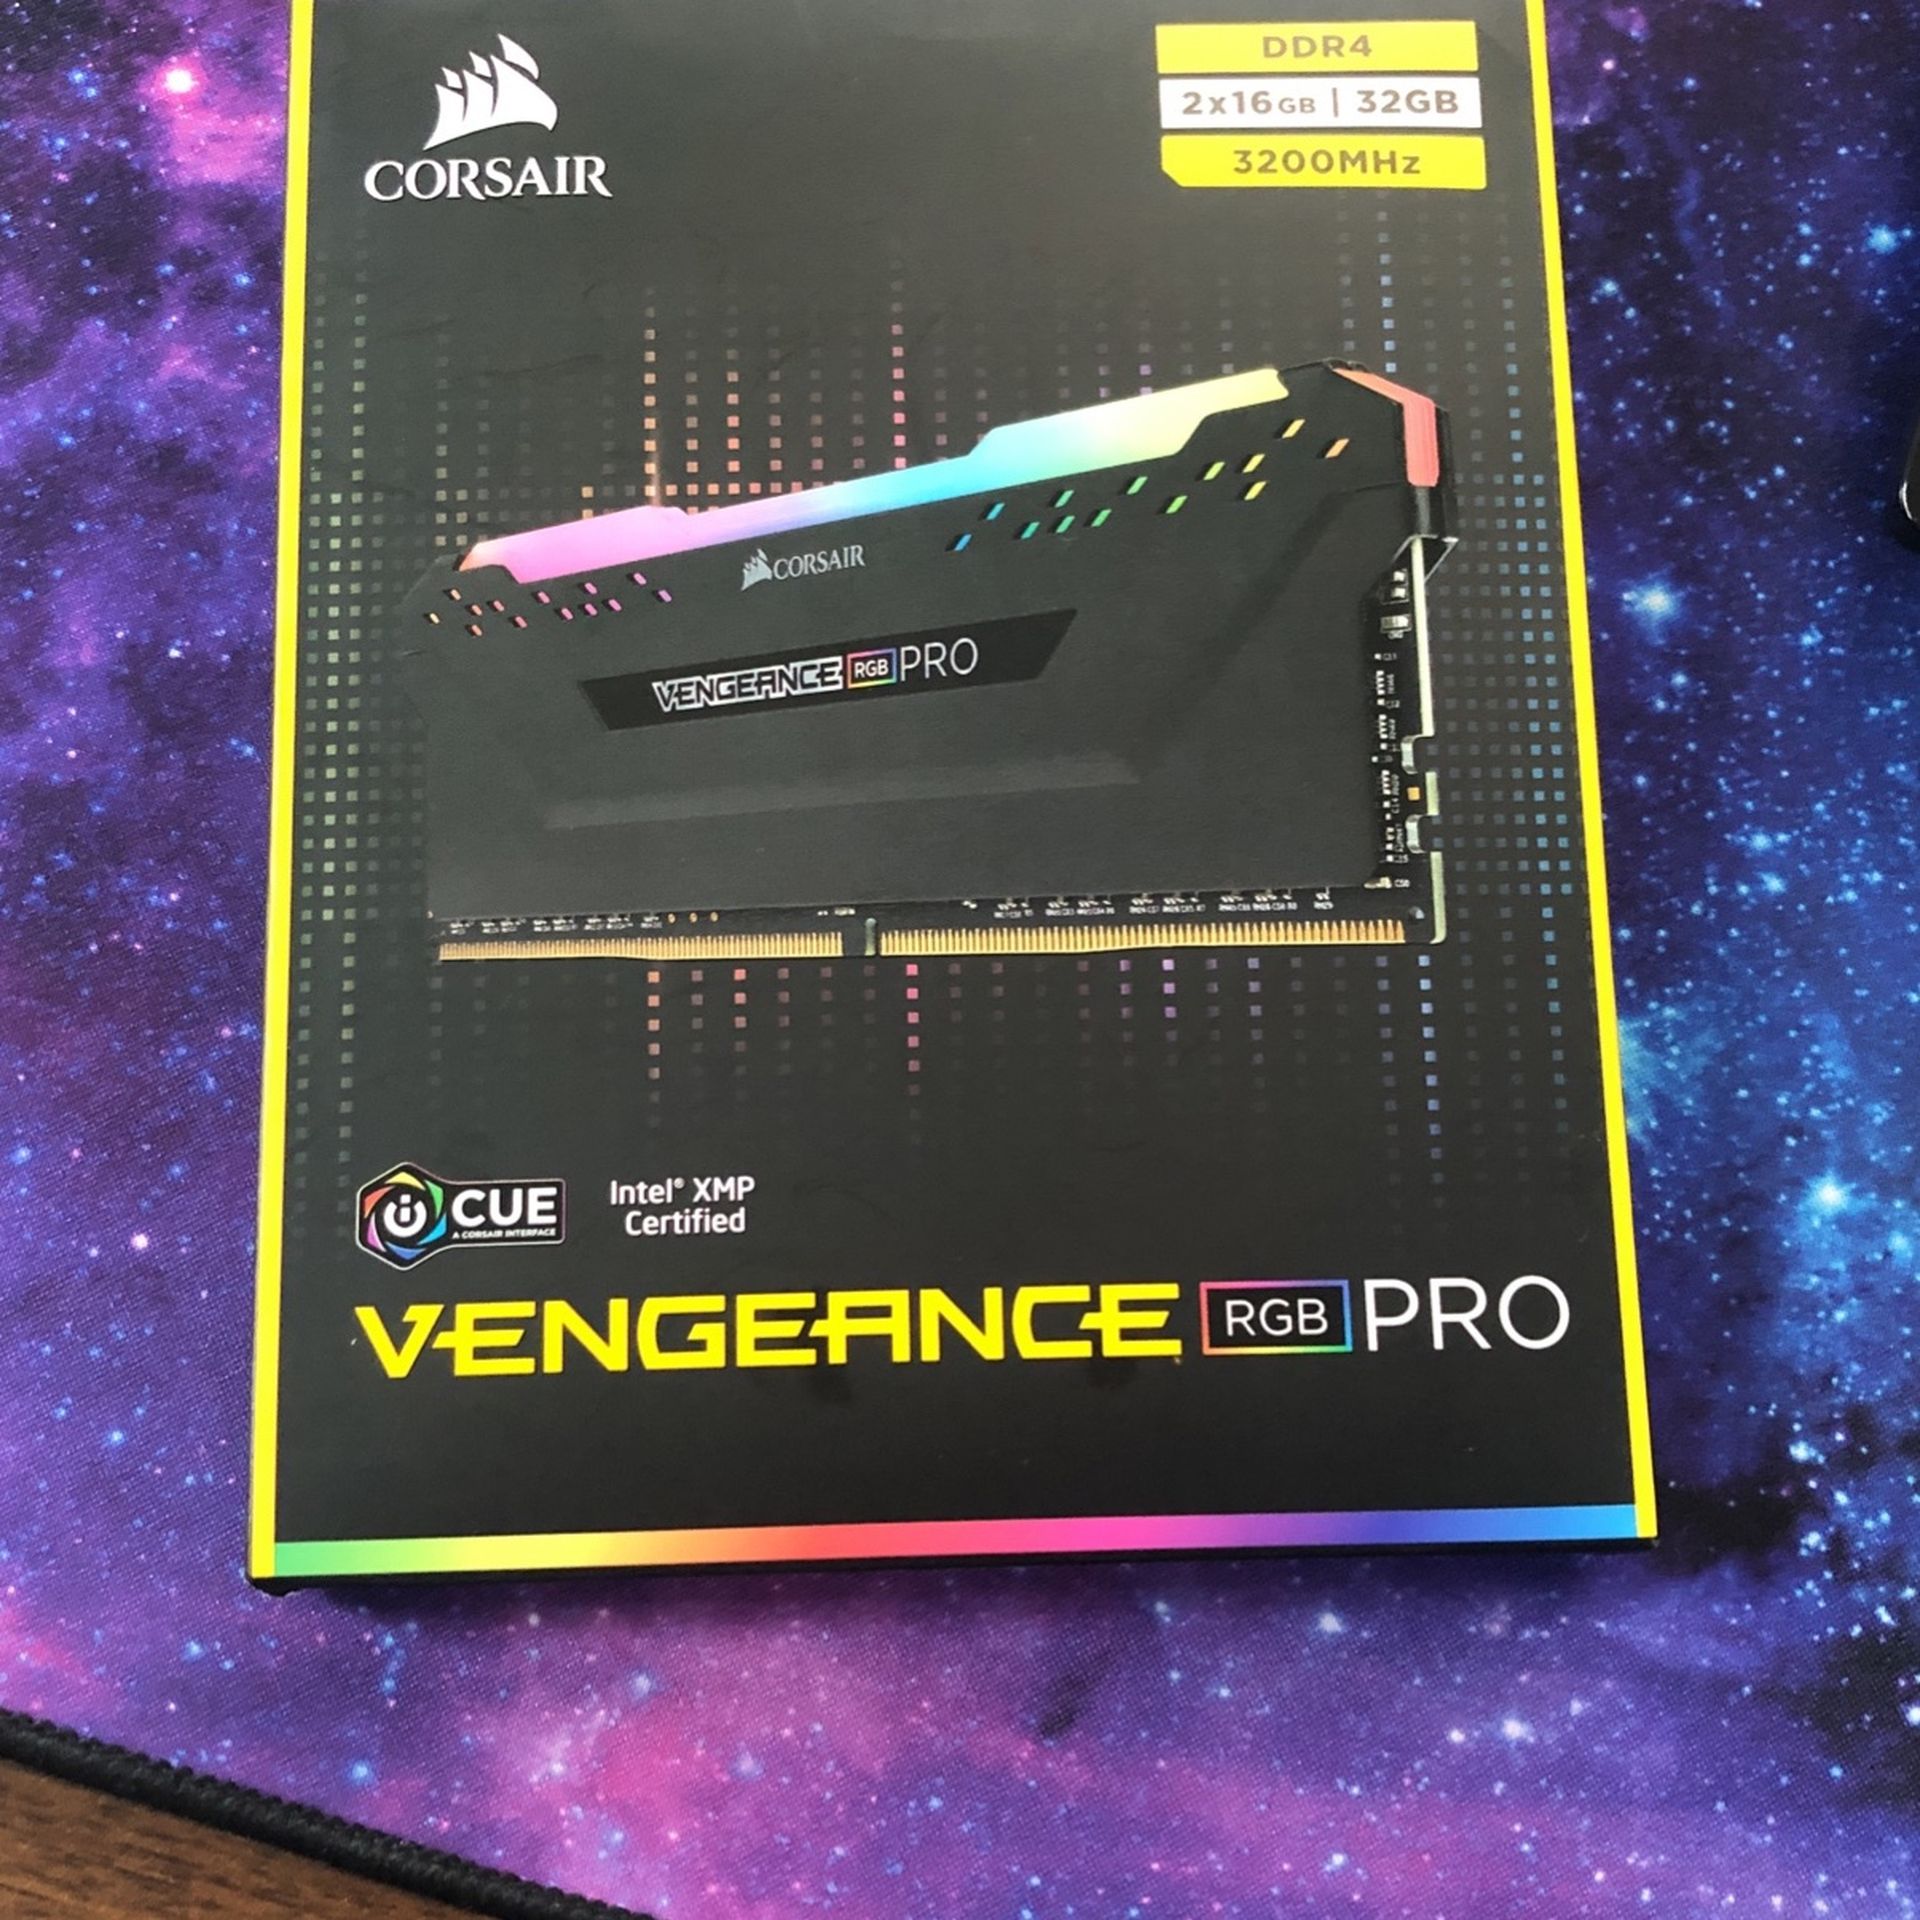 Corsair Vengeance RGB Pro RAM